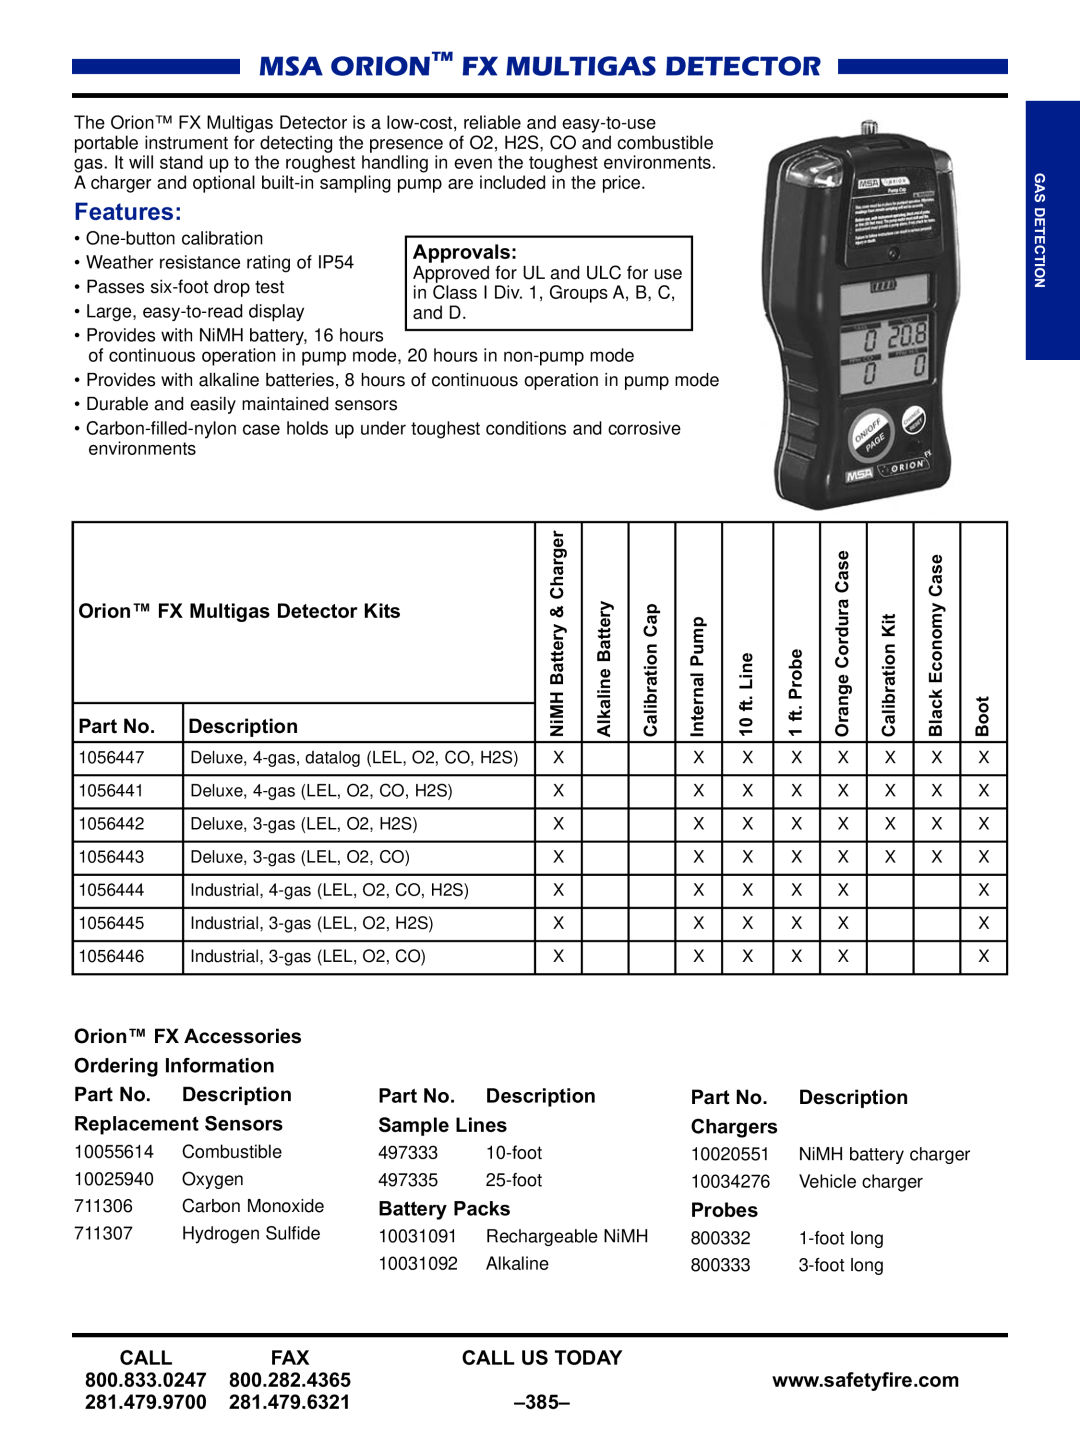 Black & Decker MULTI-GAS DETECTORS manual Msa Orion Fx Multigas Detector, Features 